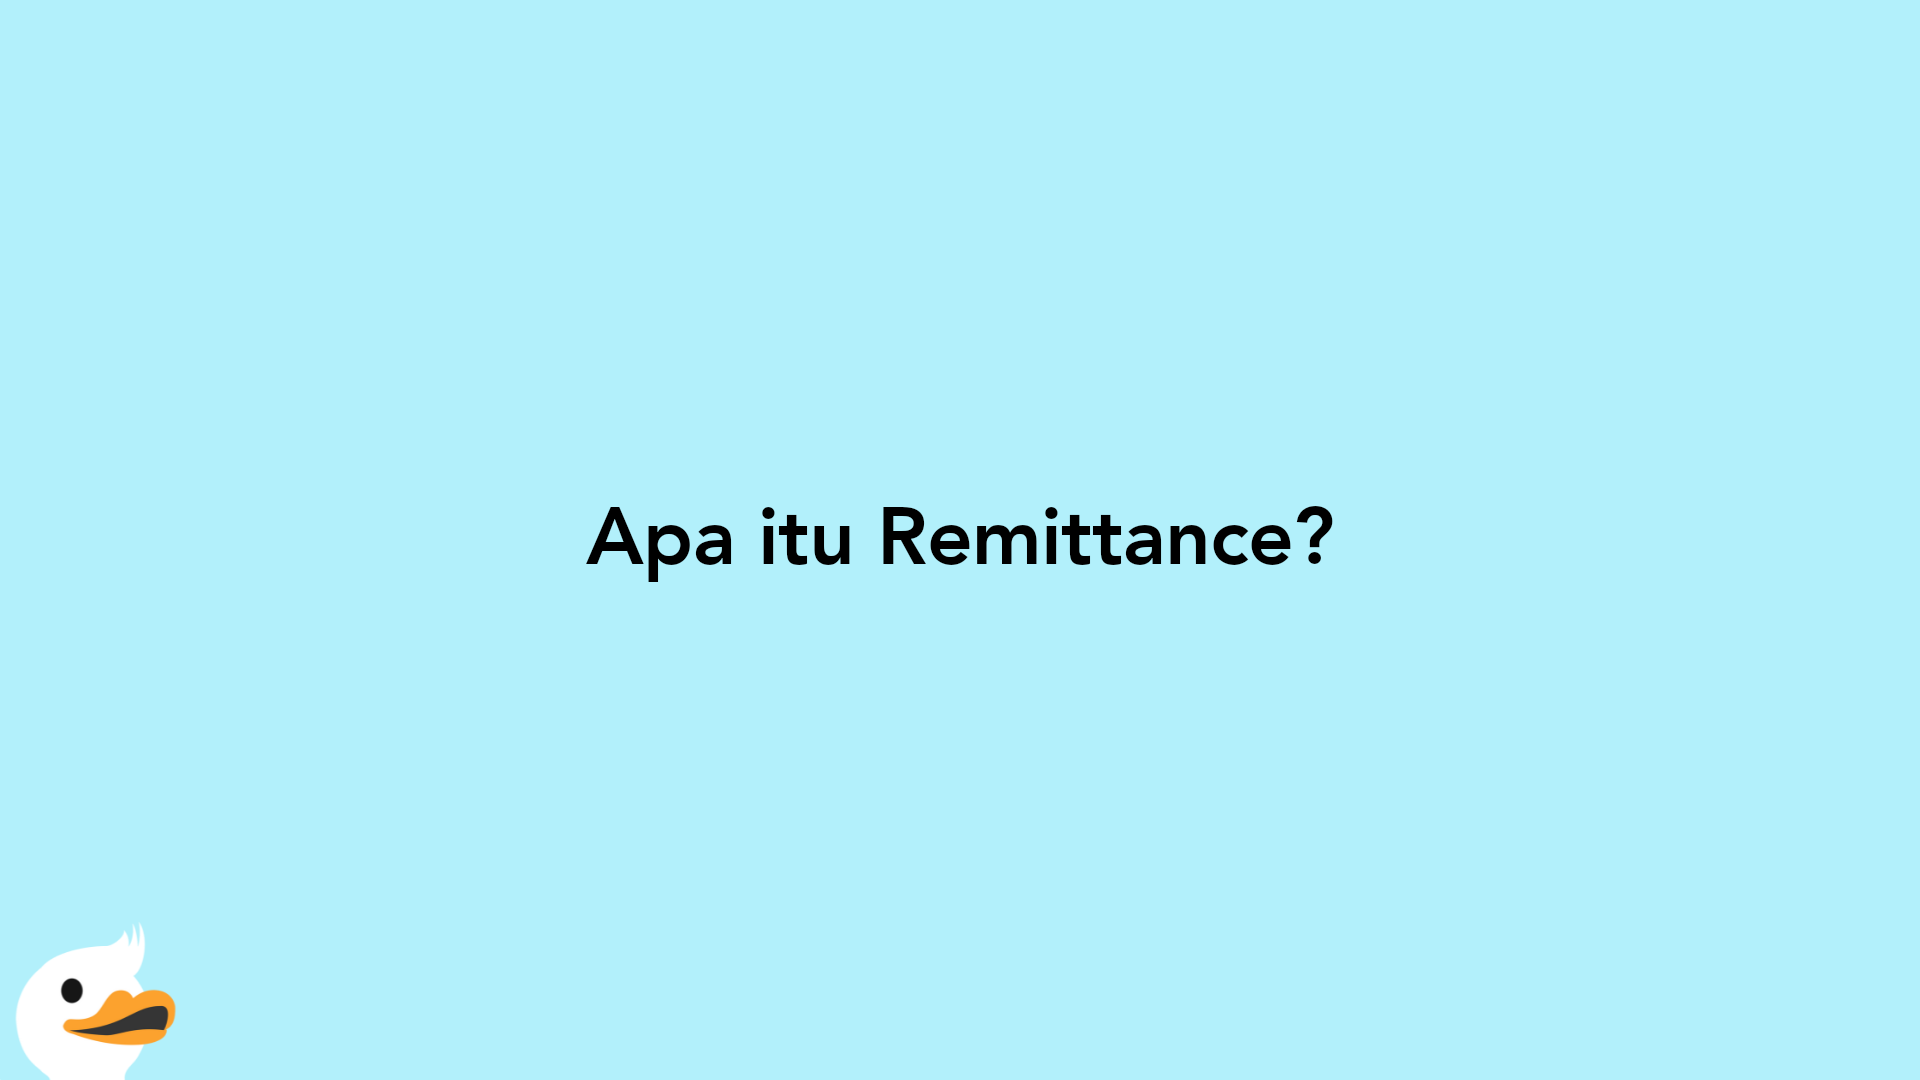 Apa itu Remittance?